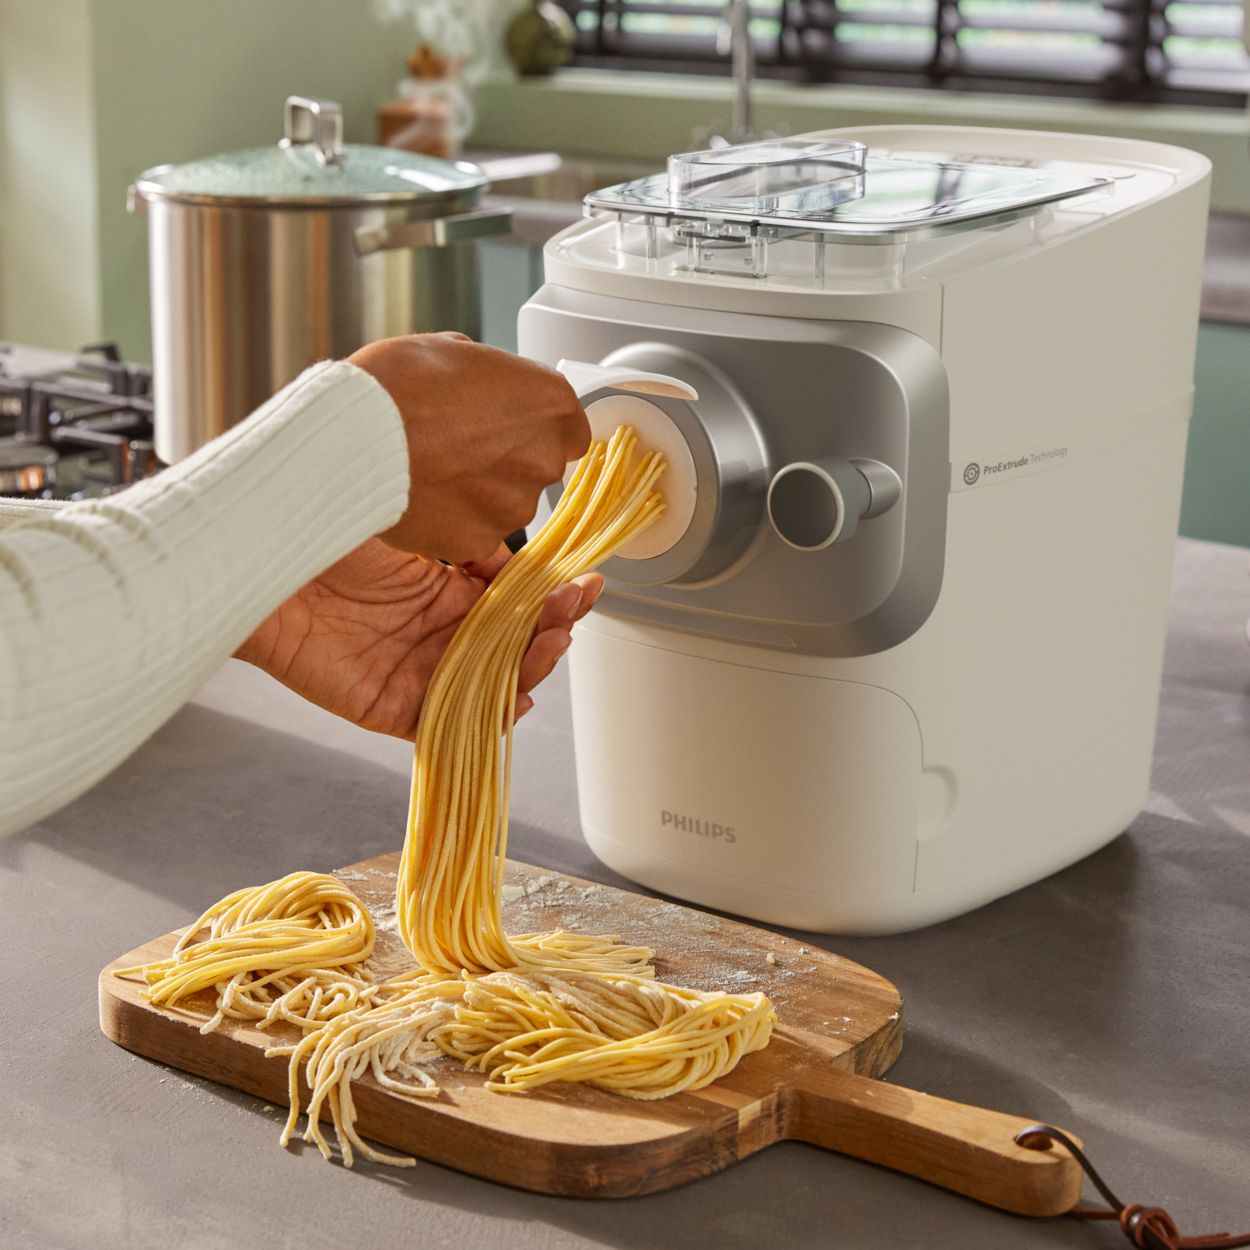  Philips 7000 Series Pasta Maker, ProExtrude Technology